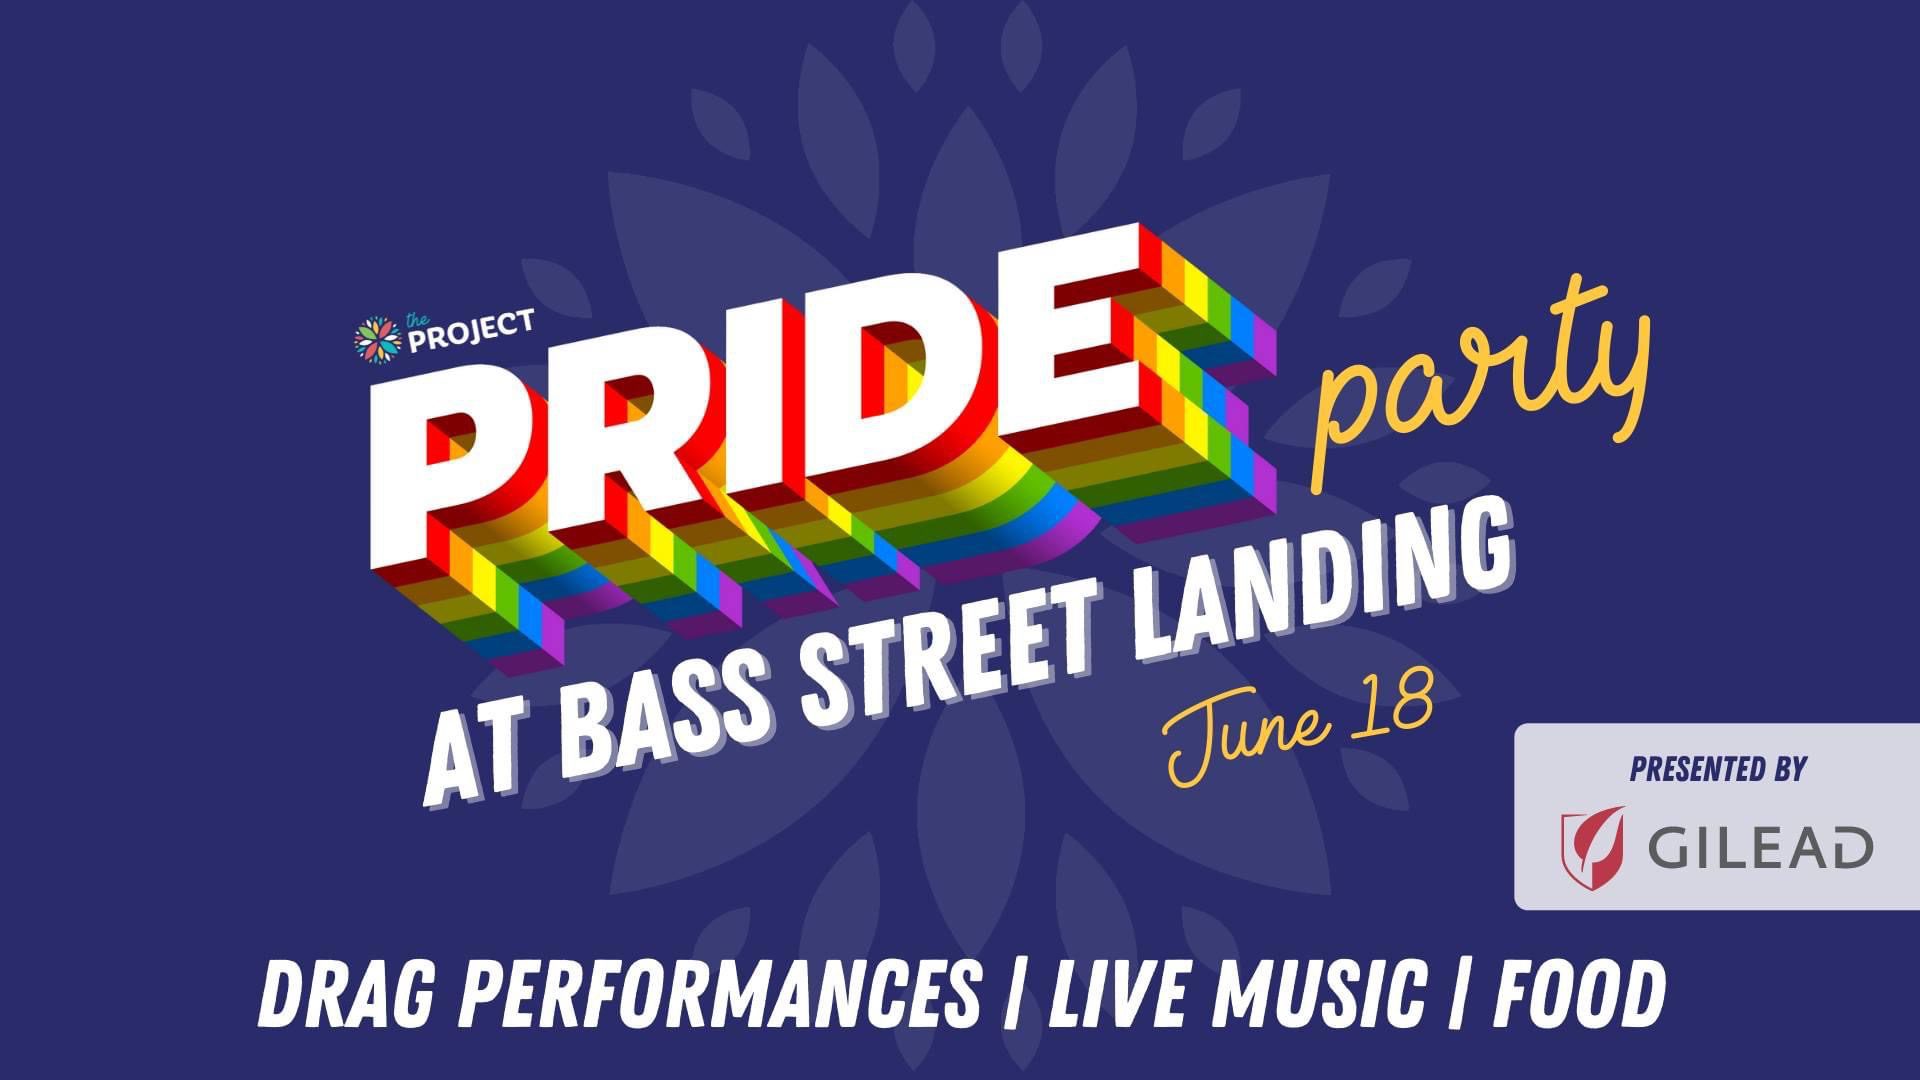 Get Your Pride On At Pride Party Saturday In Moline!